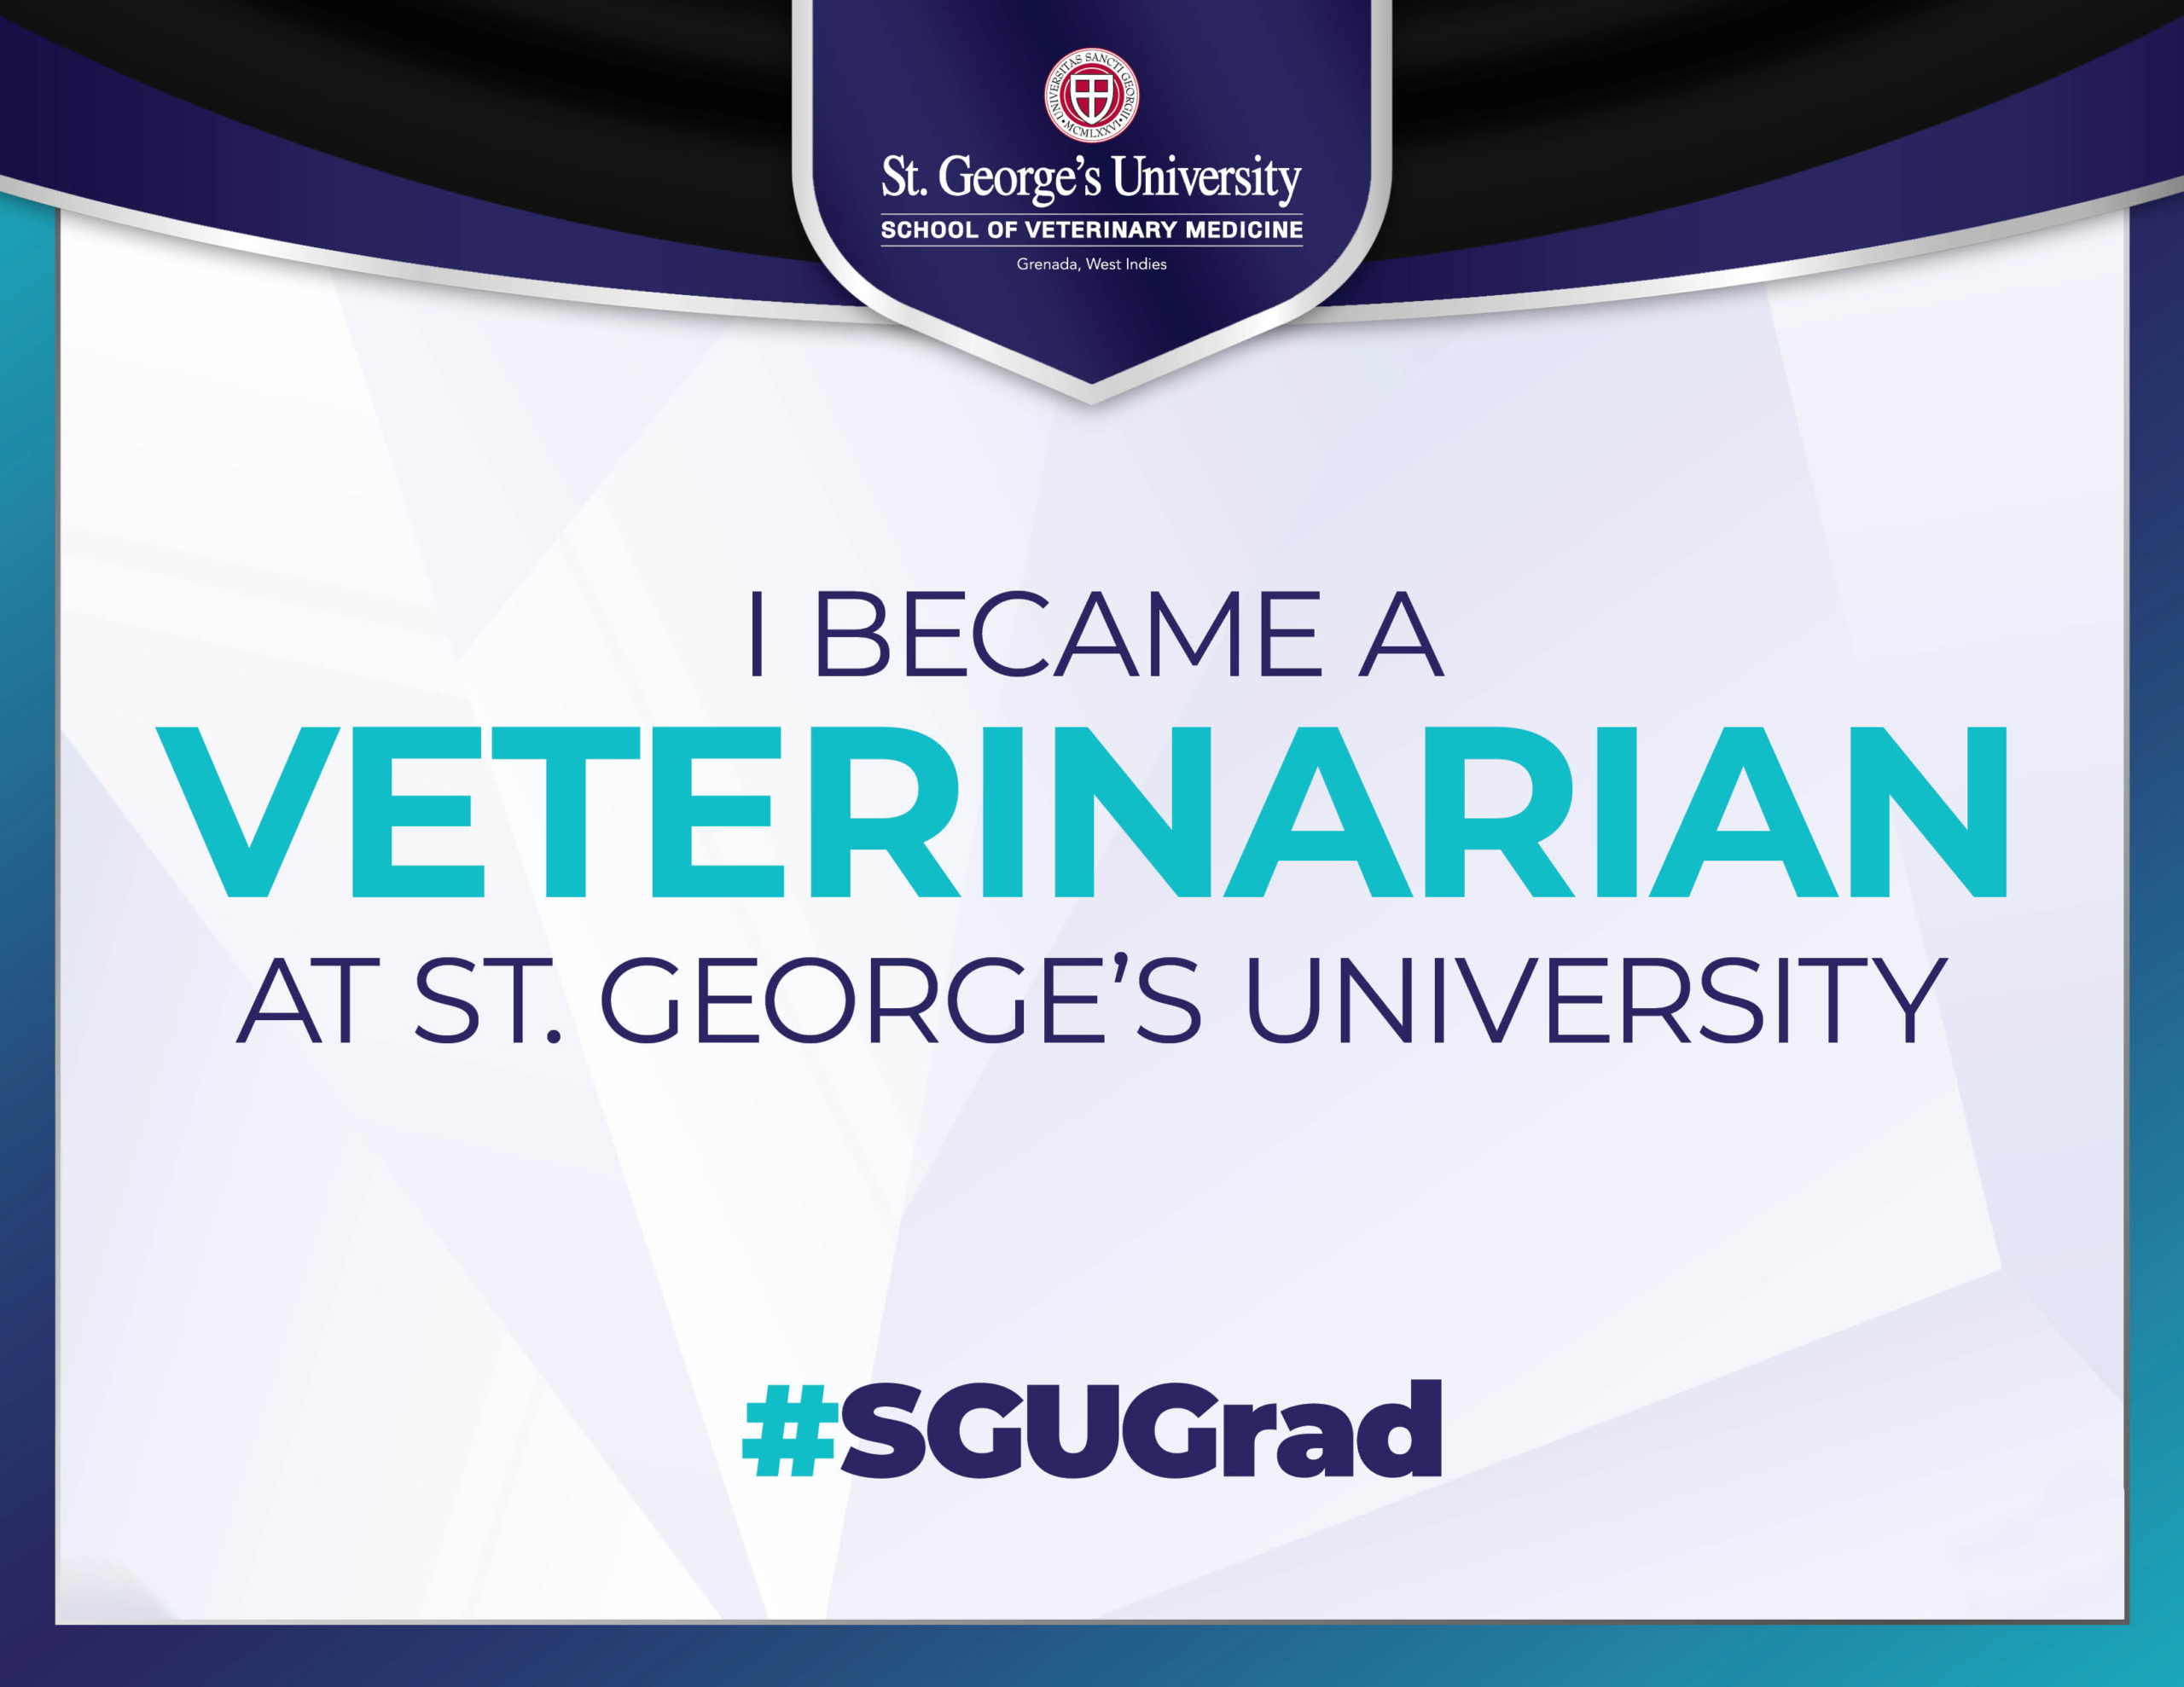 I became a veterinarian at sgu